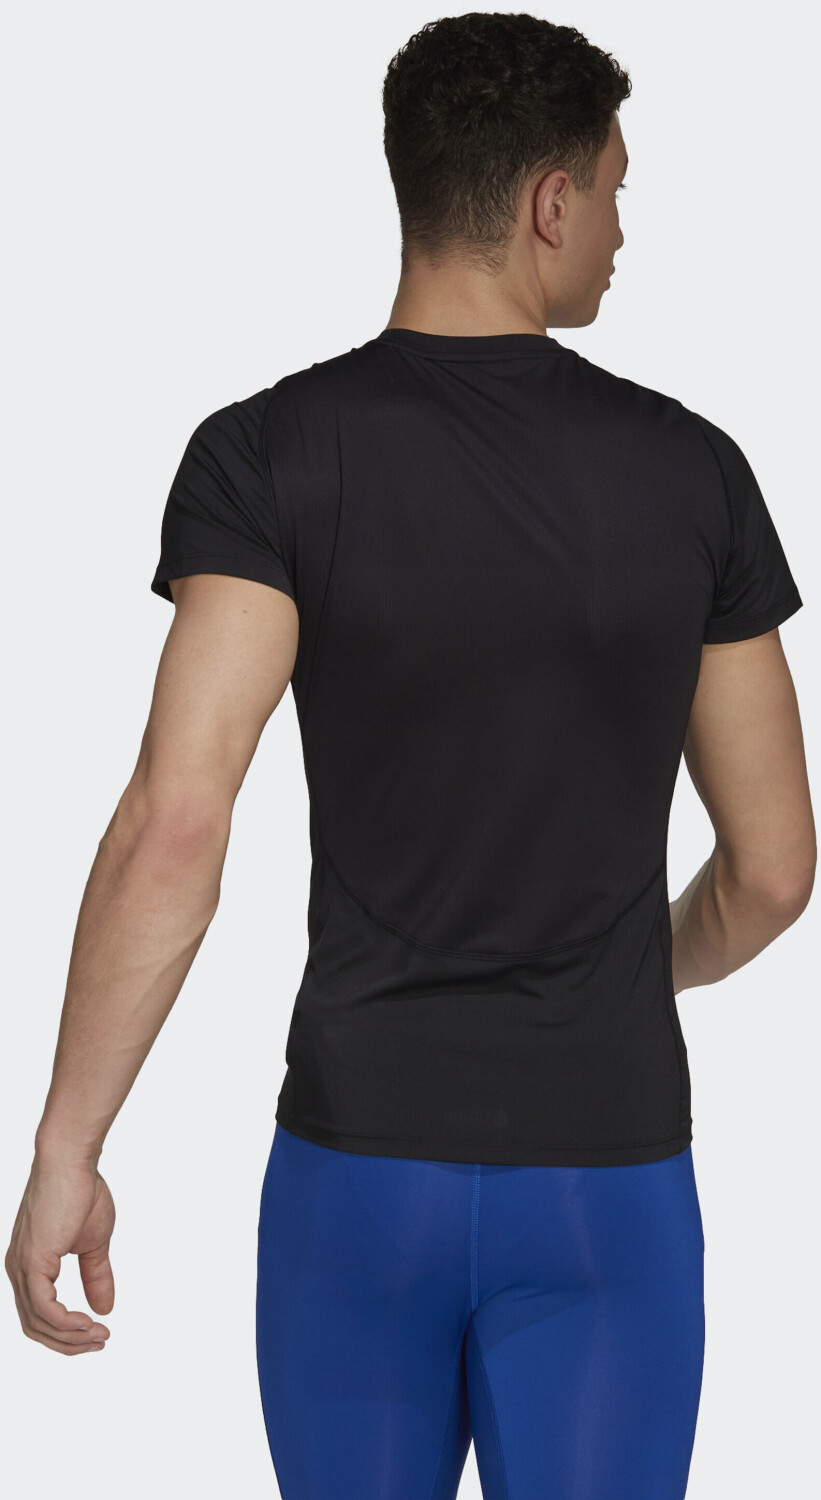 Adidas Techfit Training Running Shirt Men (HK2337) black ab 16,44 ...